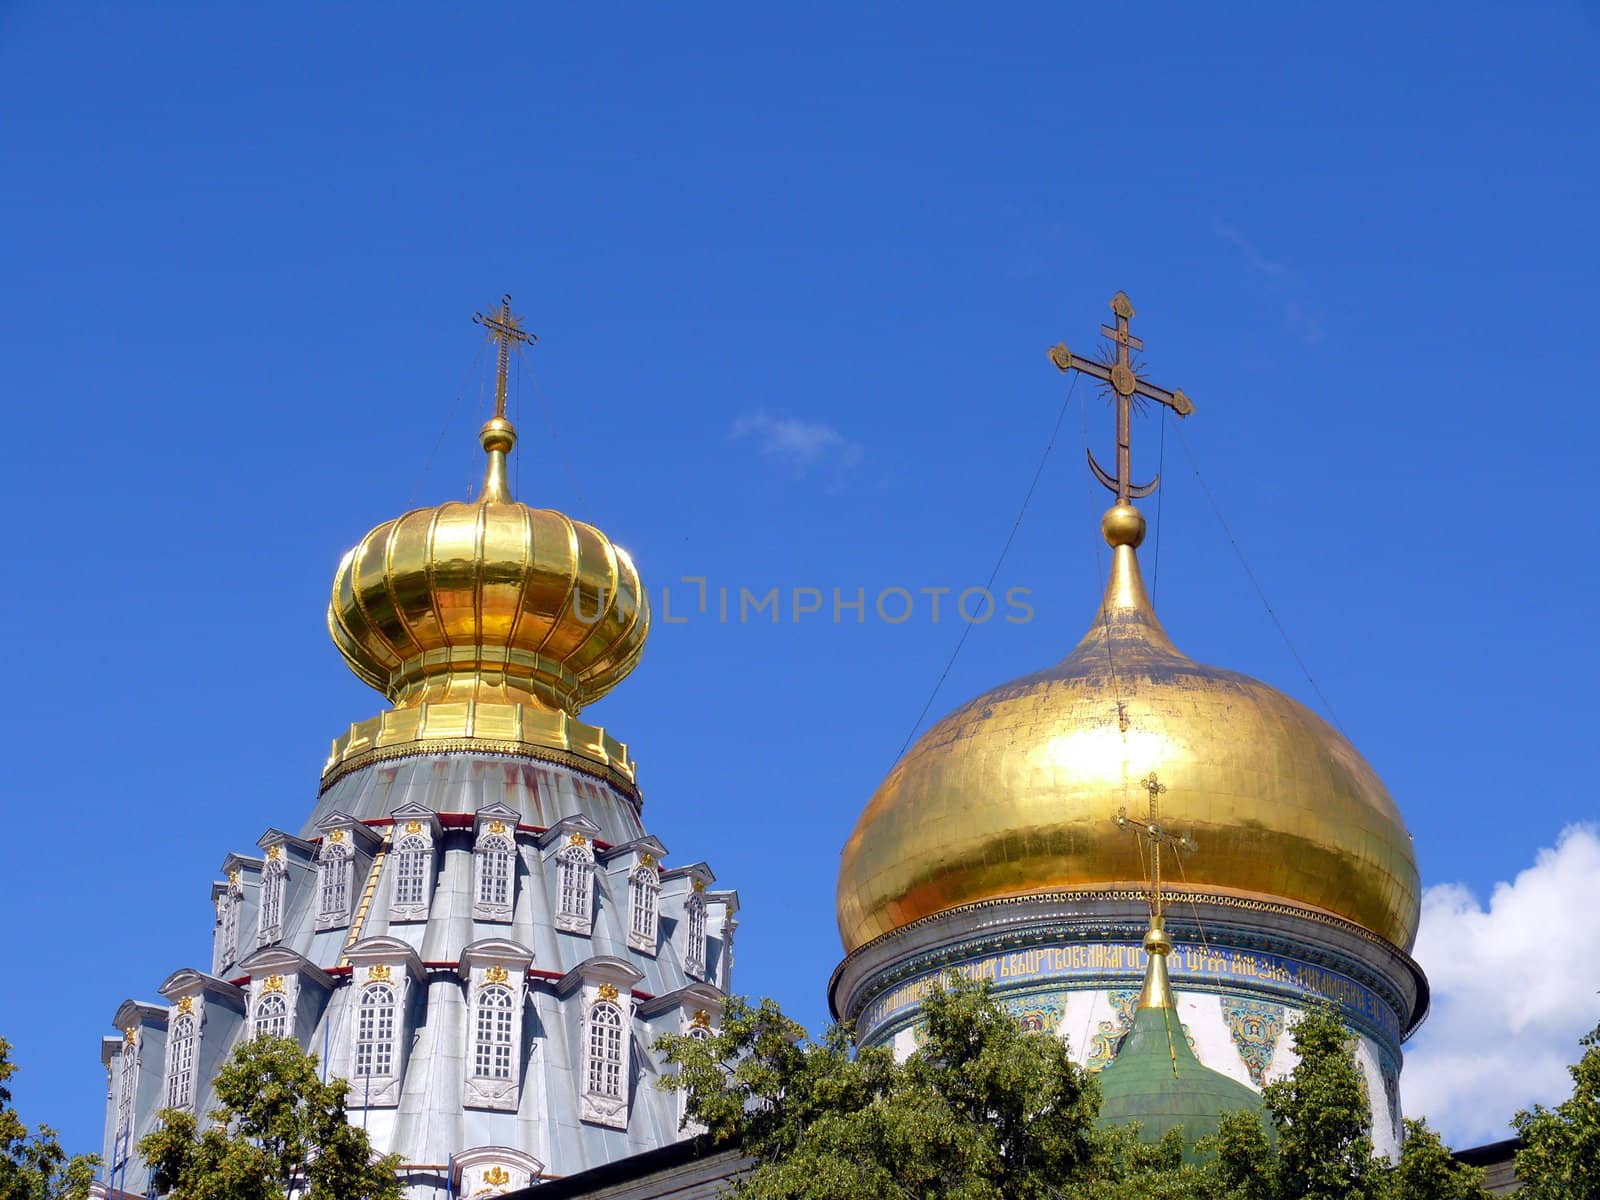 New Jerusalem monastery - Russia by Stoyanov